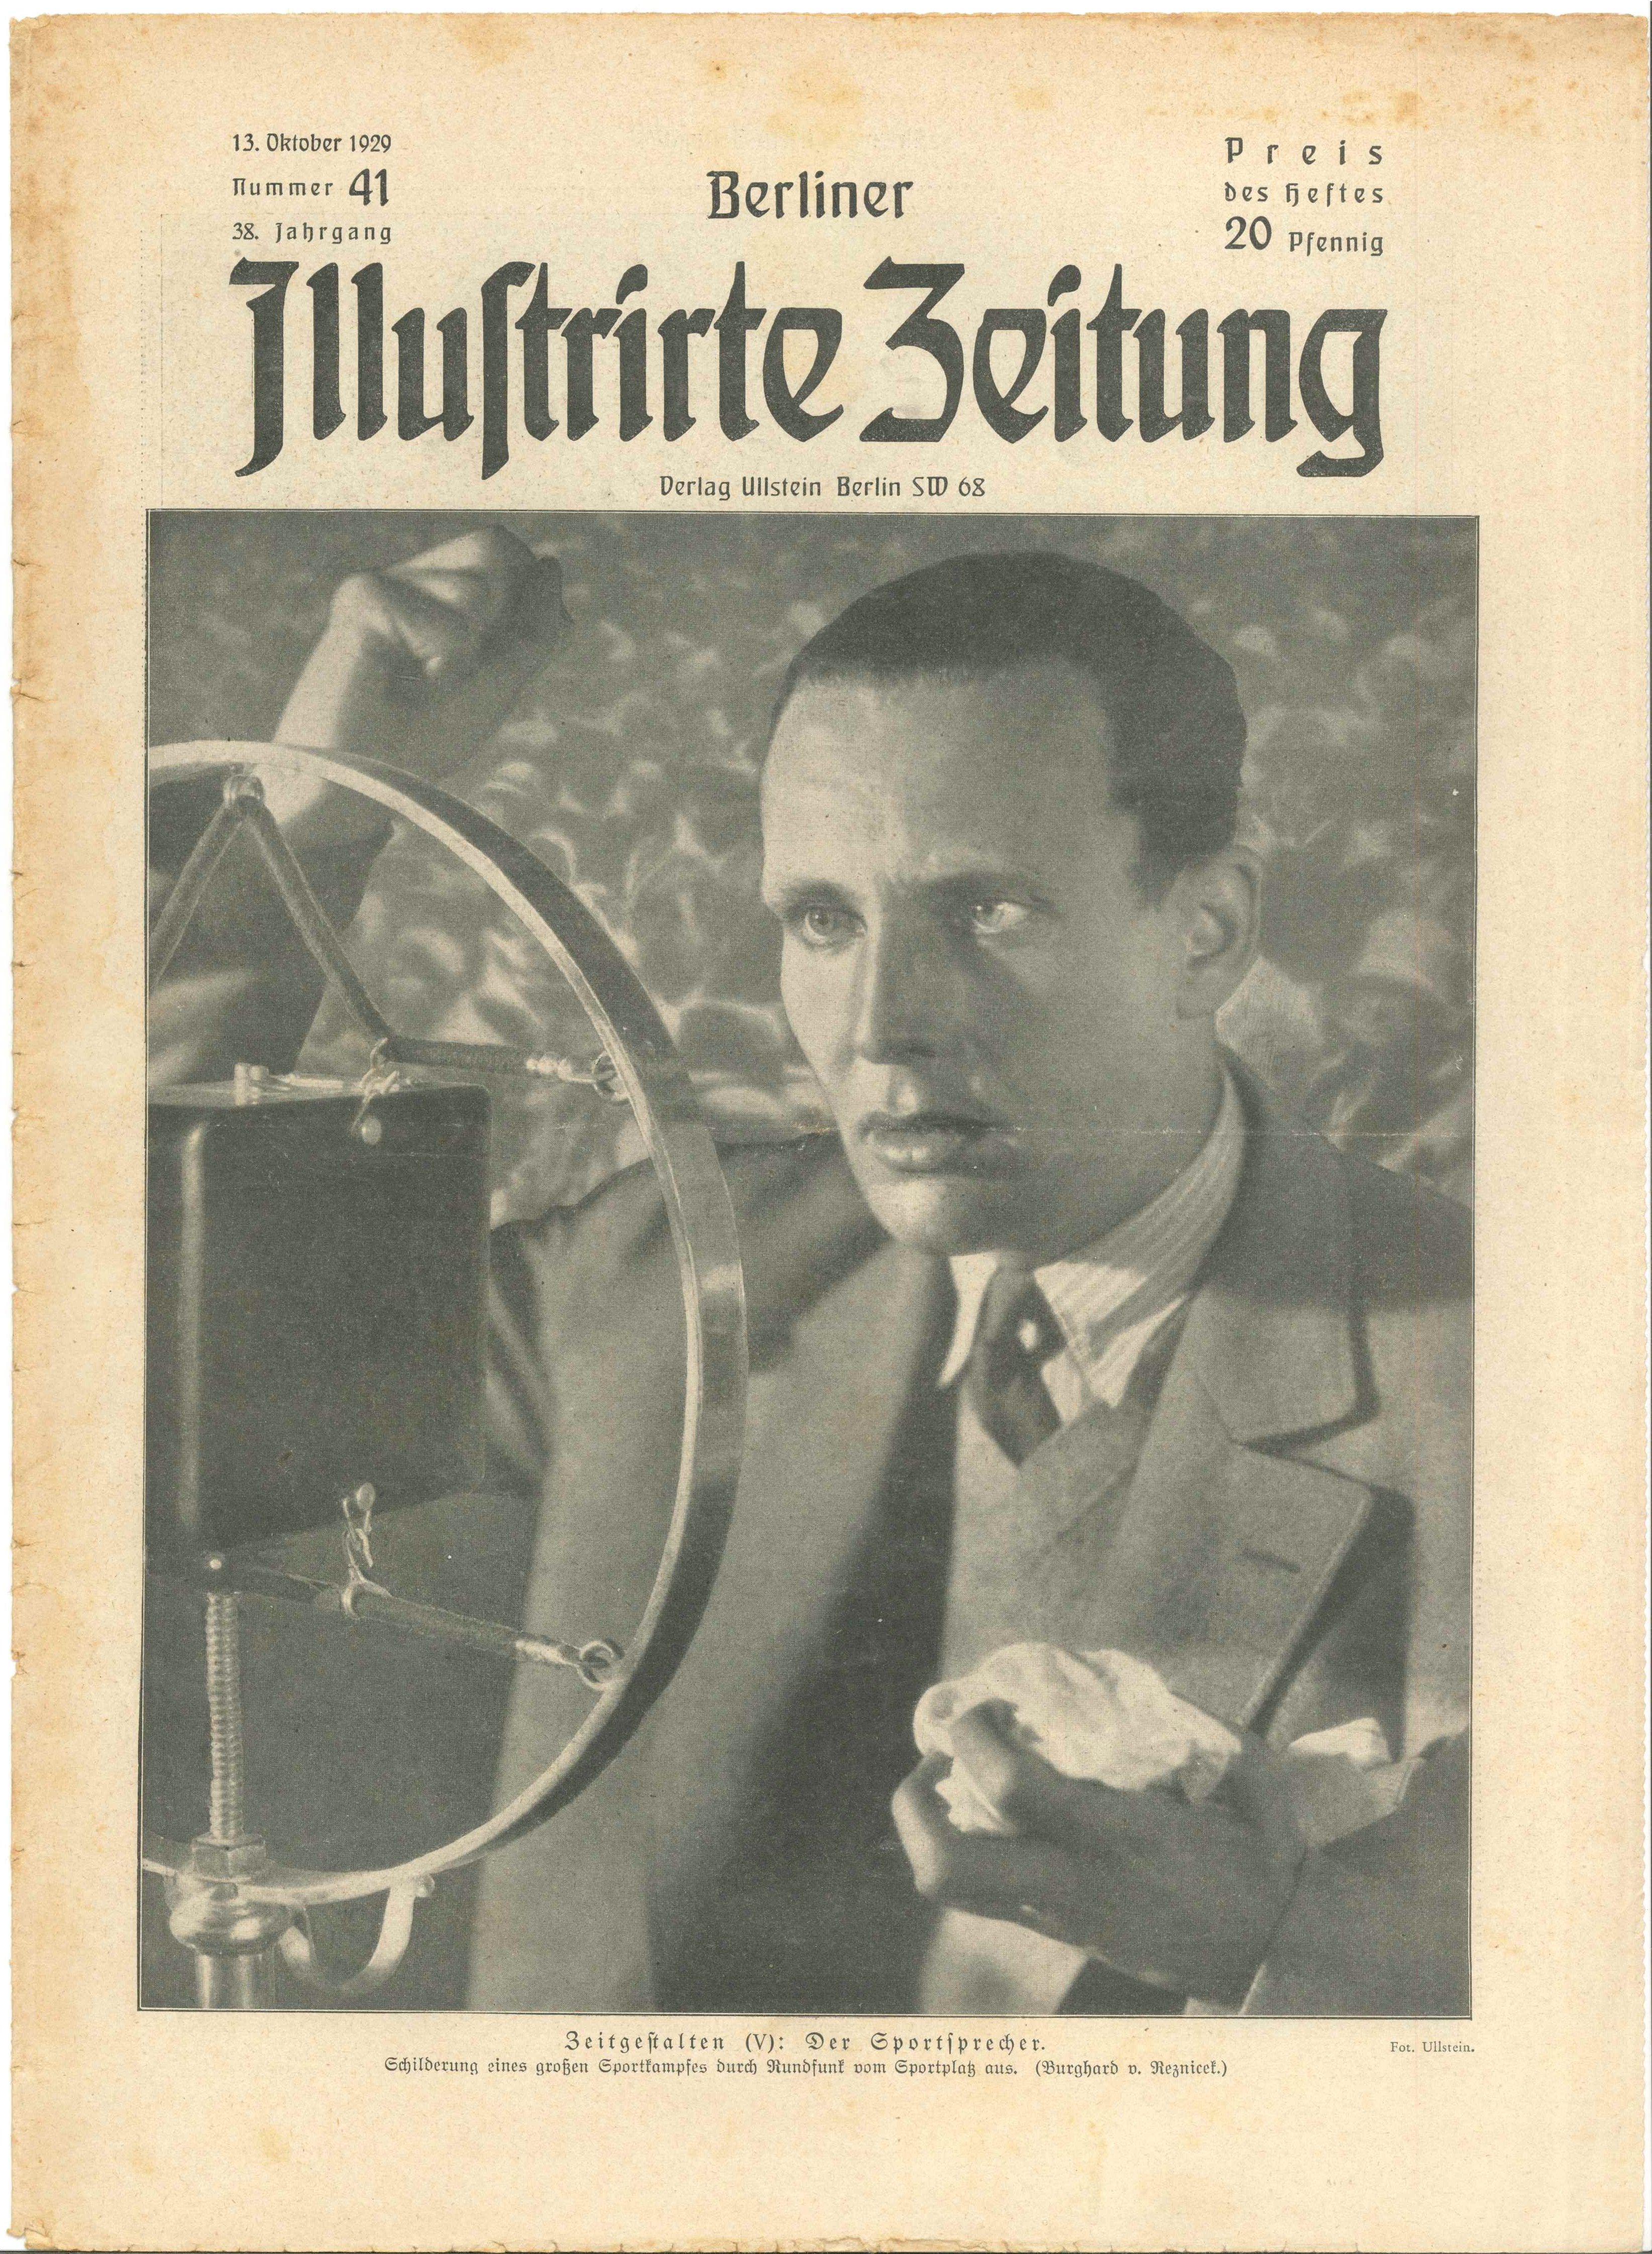 BIZ, Nr. 41, 1929, Titelseite (Kurt Tucholsky Literaturmuseum CC BY-NC-SA)